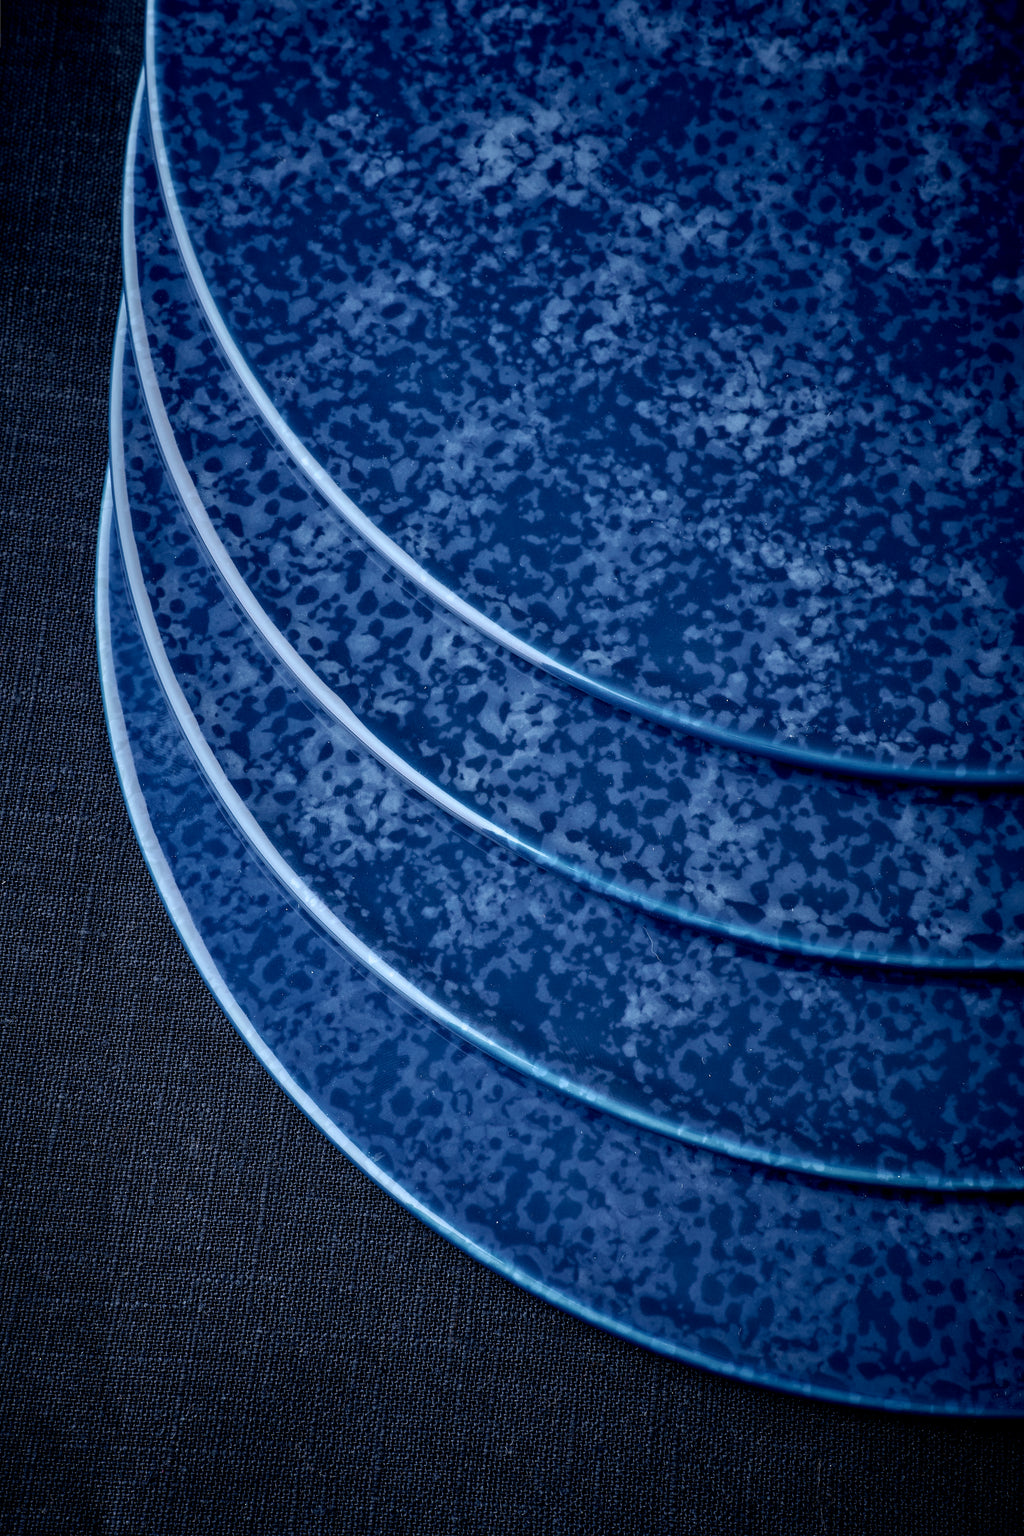 Blue Luna plate (30cm)